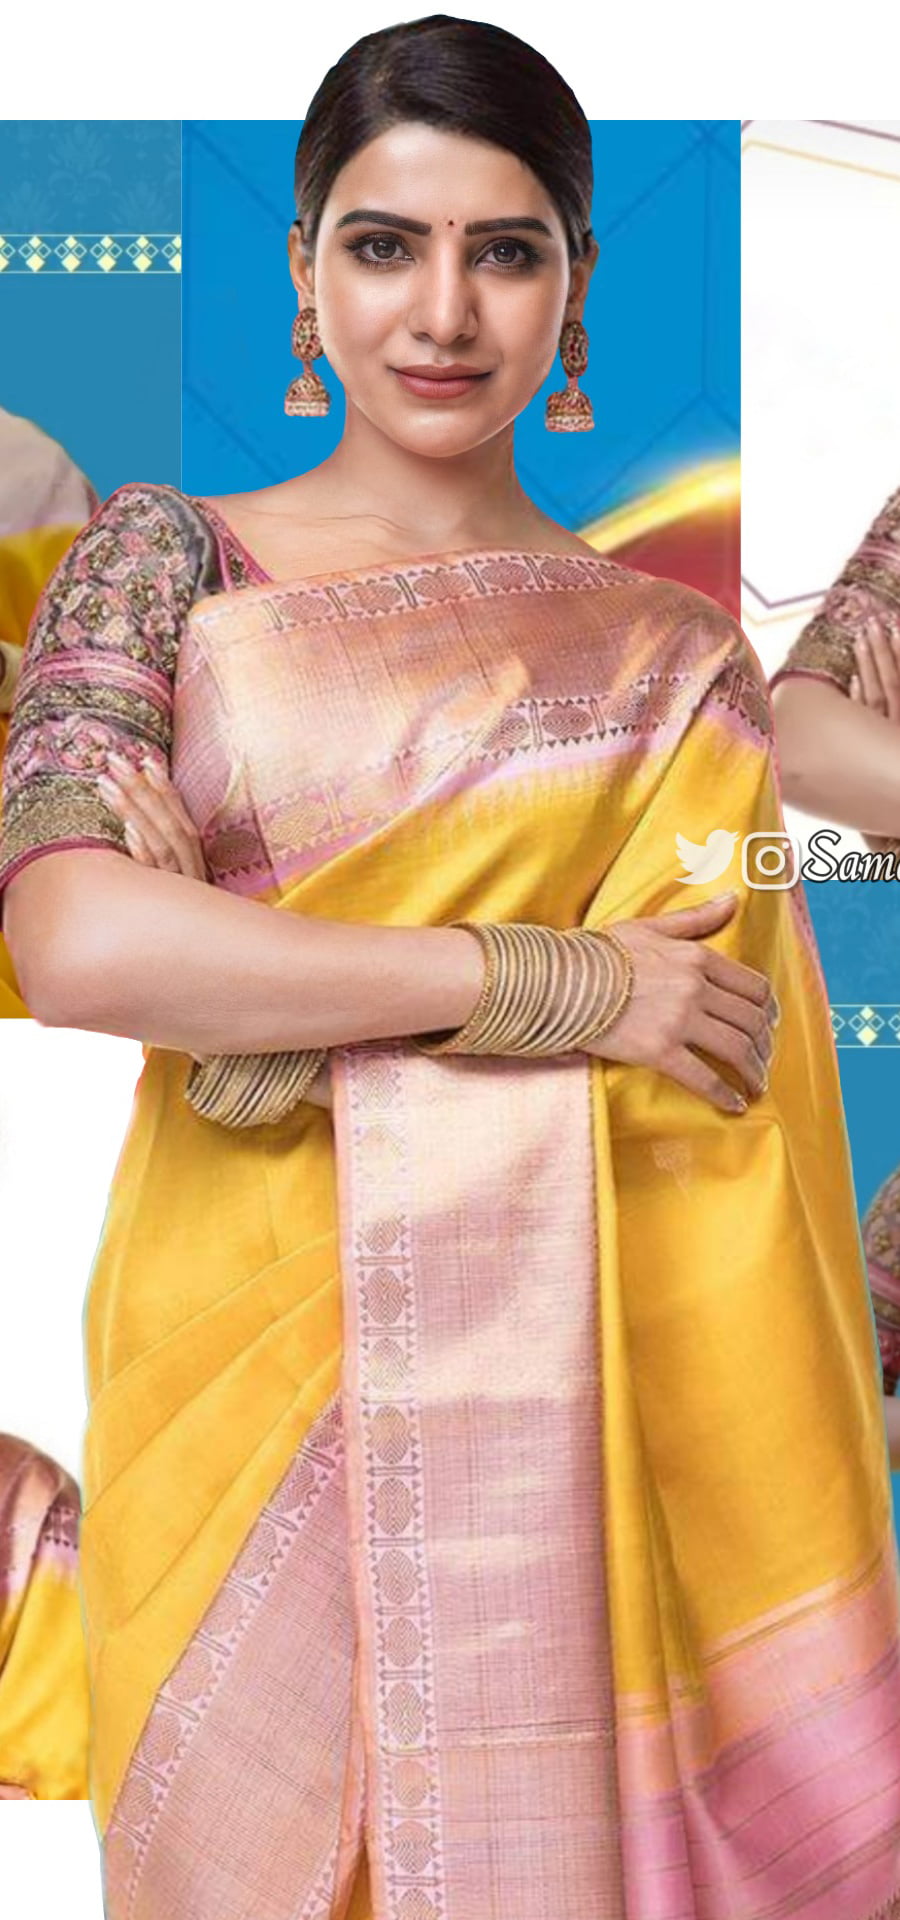 Samantha Akkineni in a gold tissue saree at Jaanu trailer launch